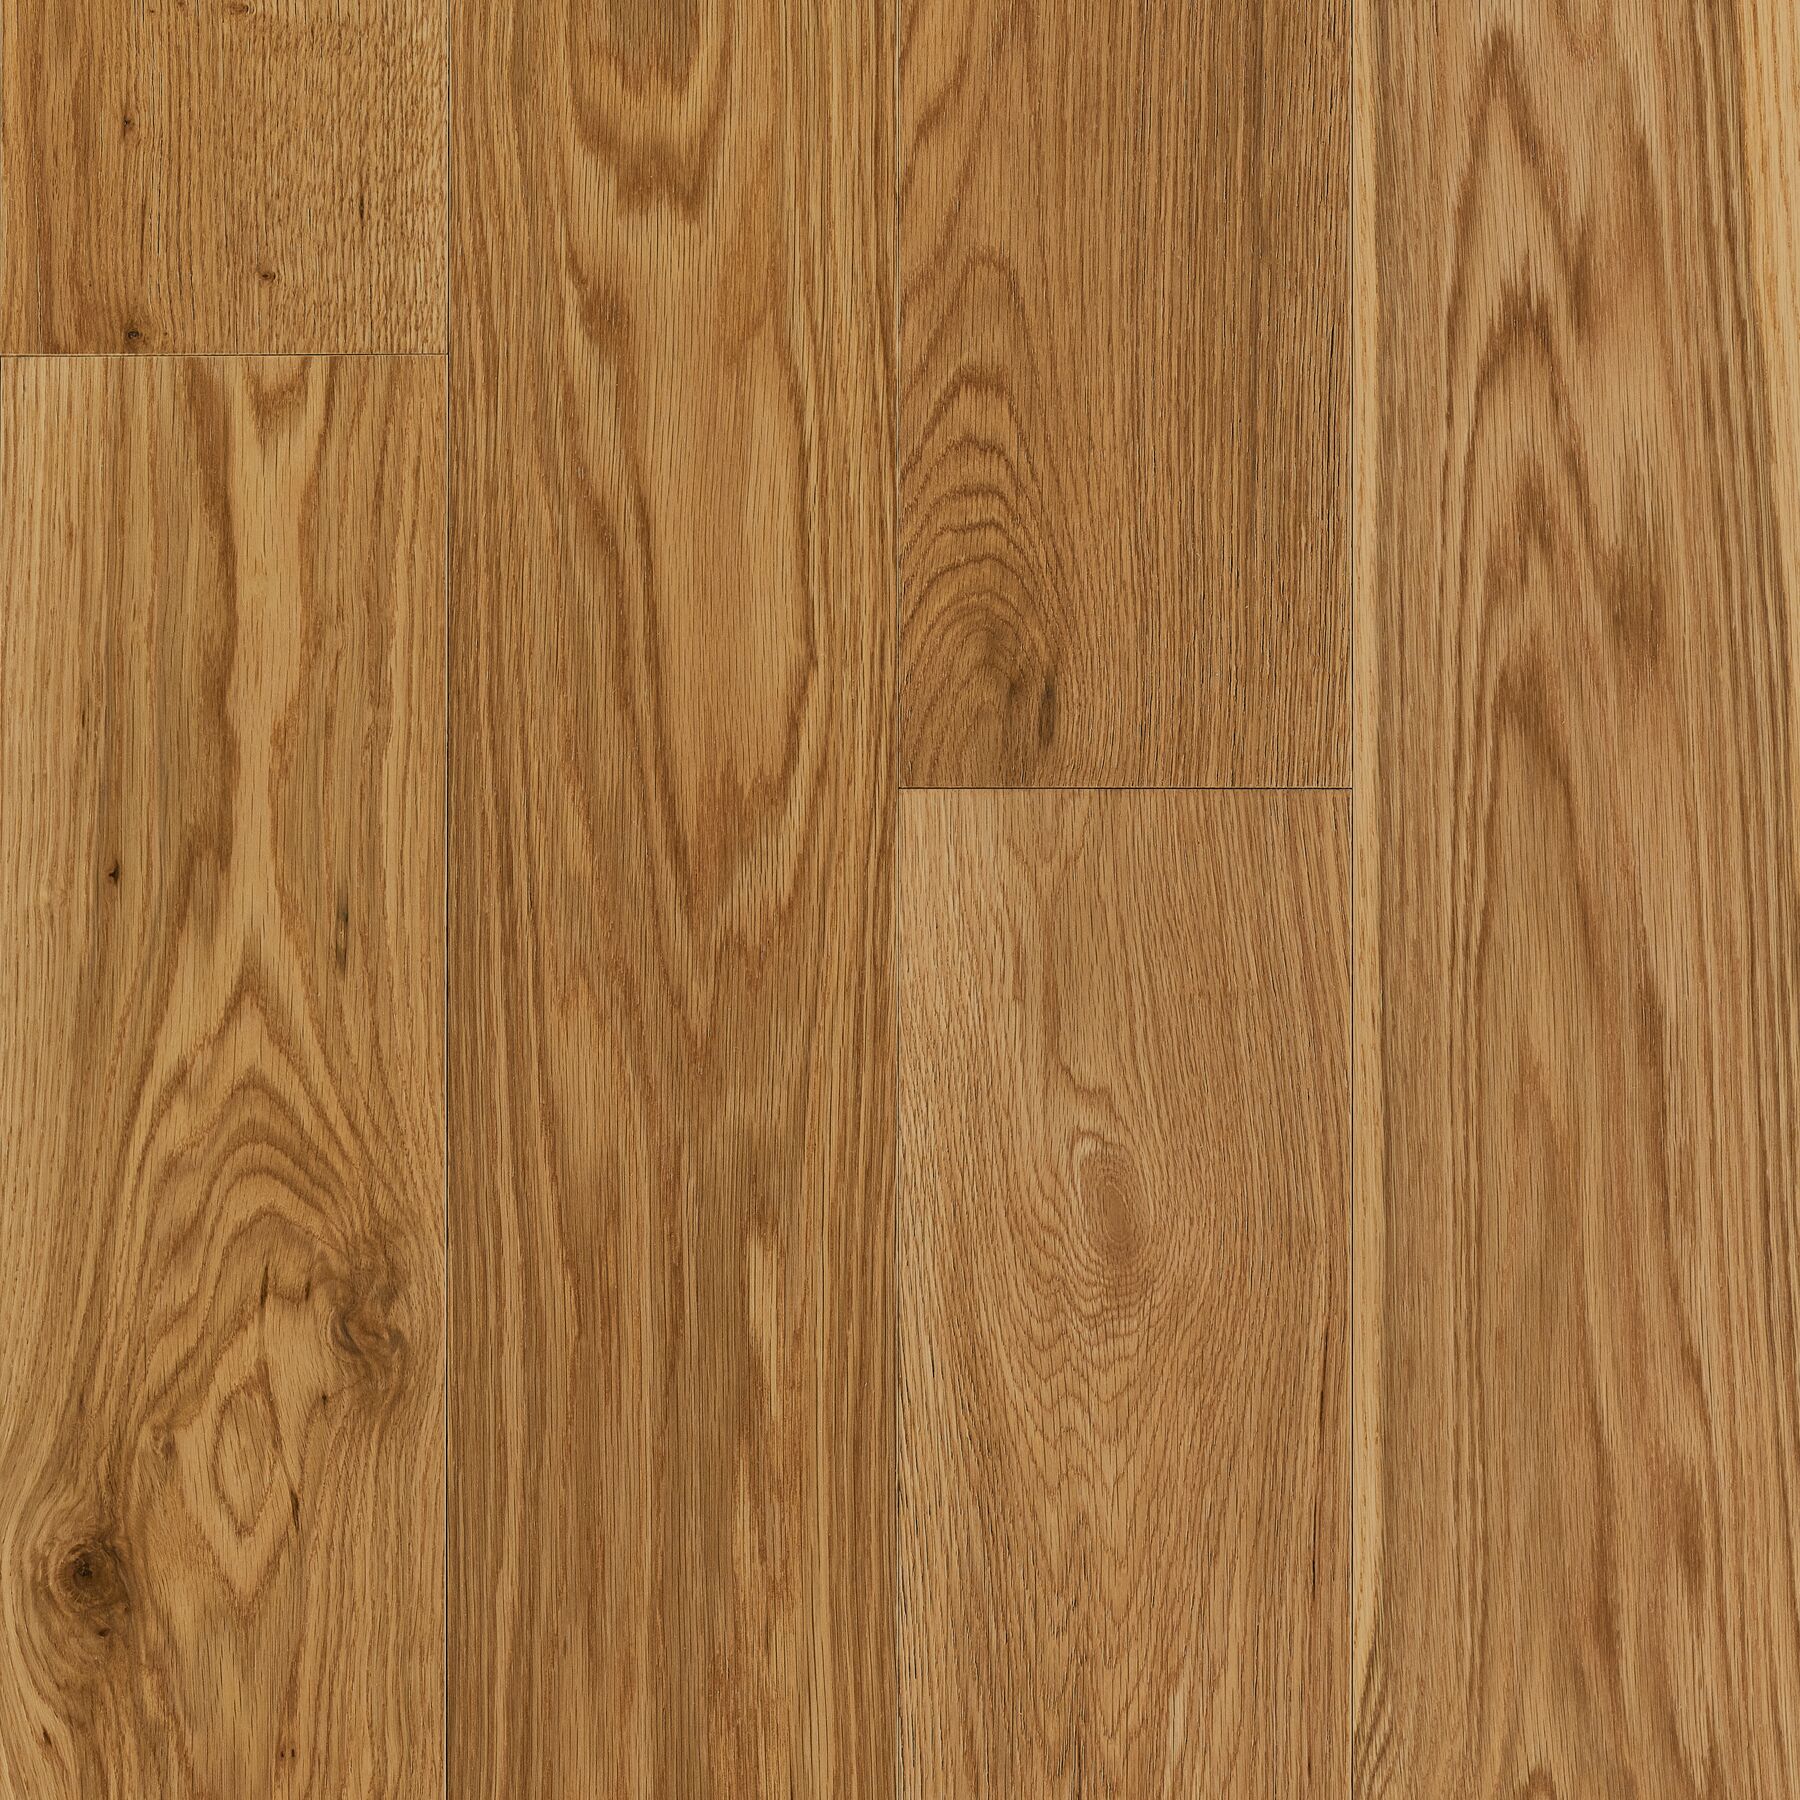 ThatcherDogwood Hardwood Flooring